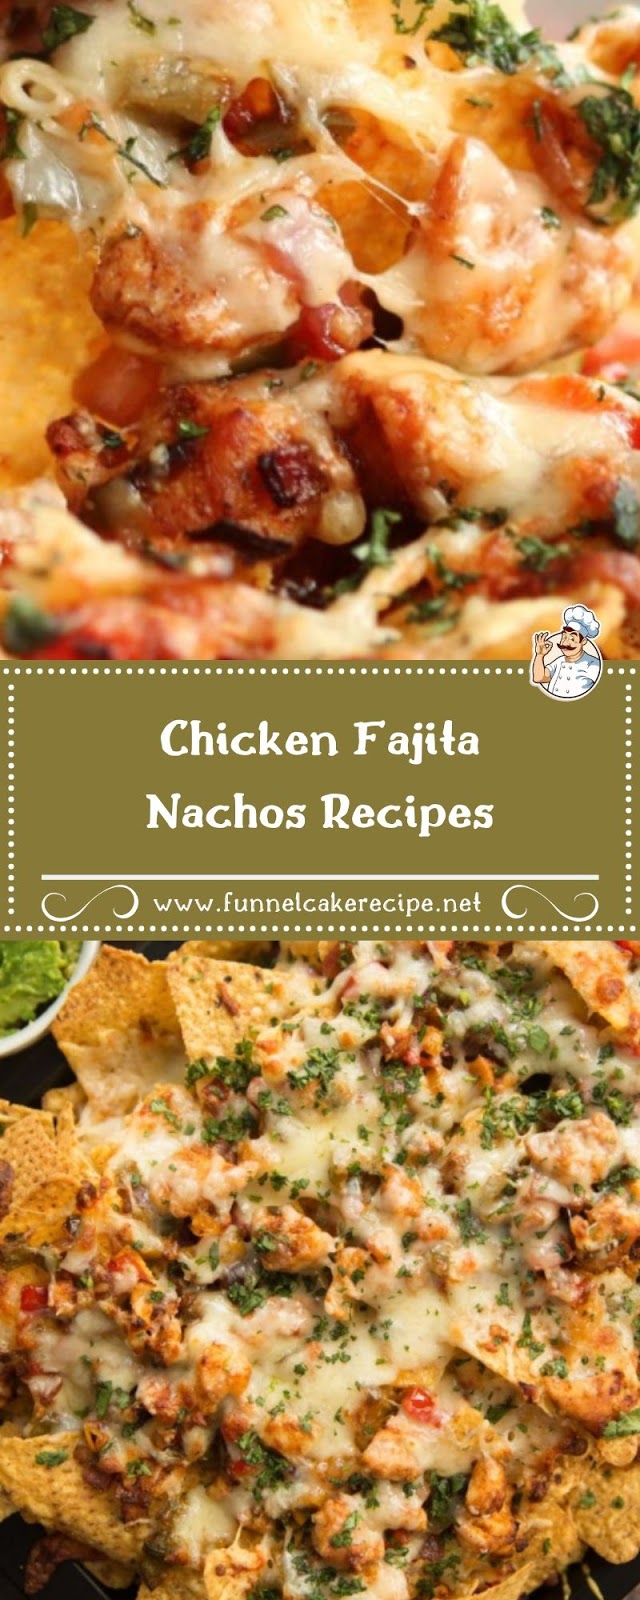 Chicken Fajita Nachos Recipes